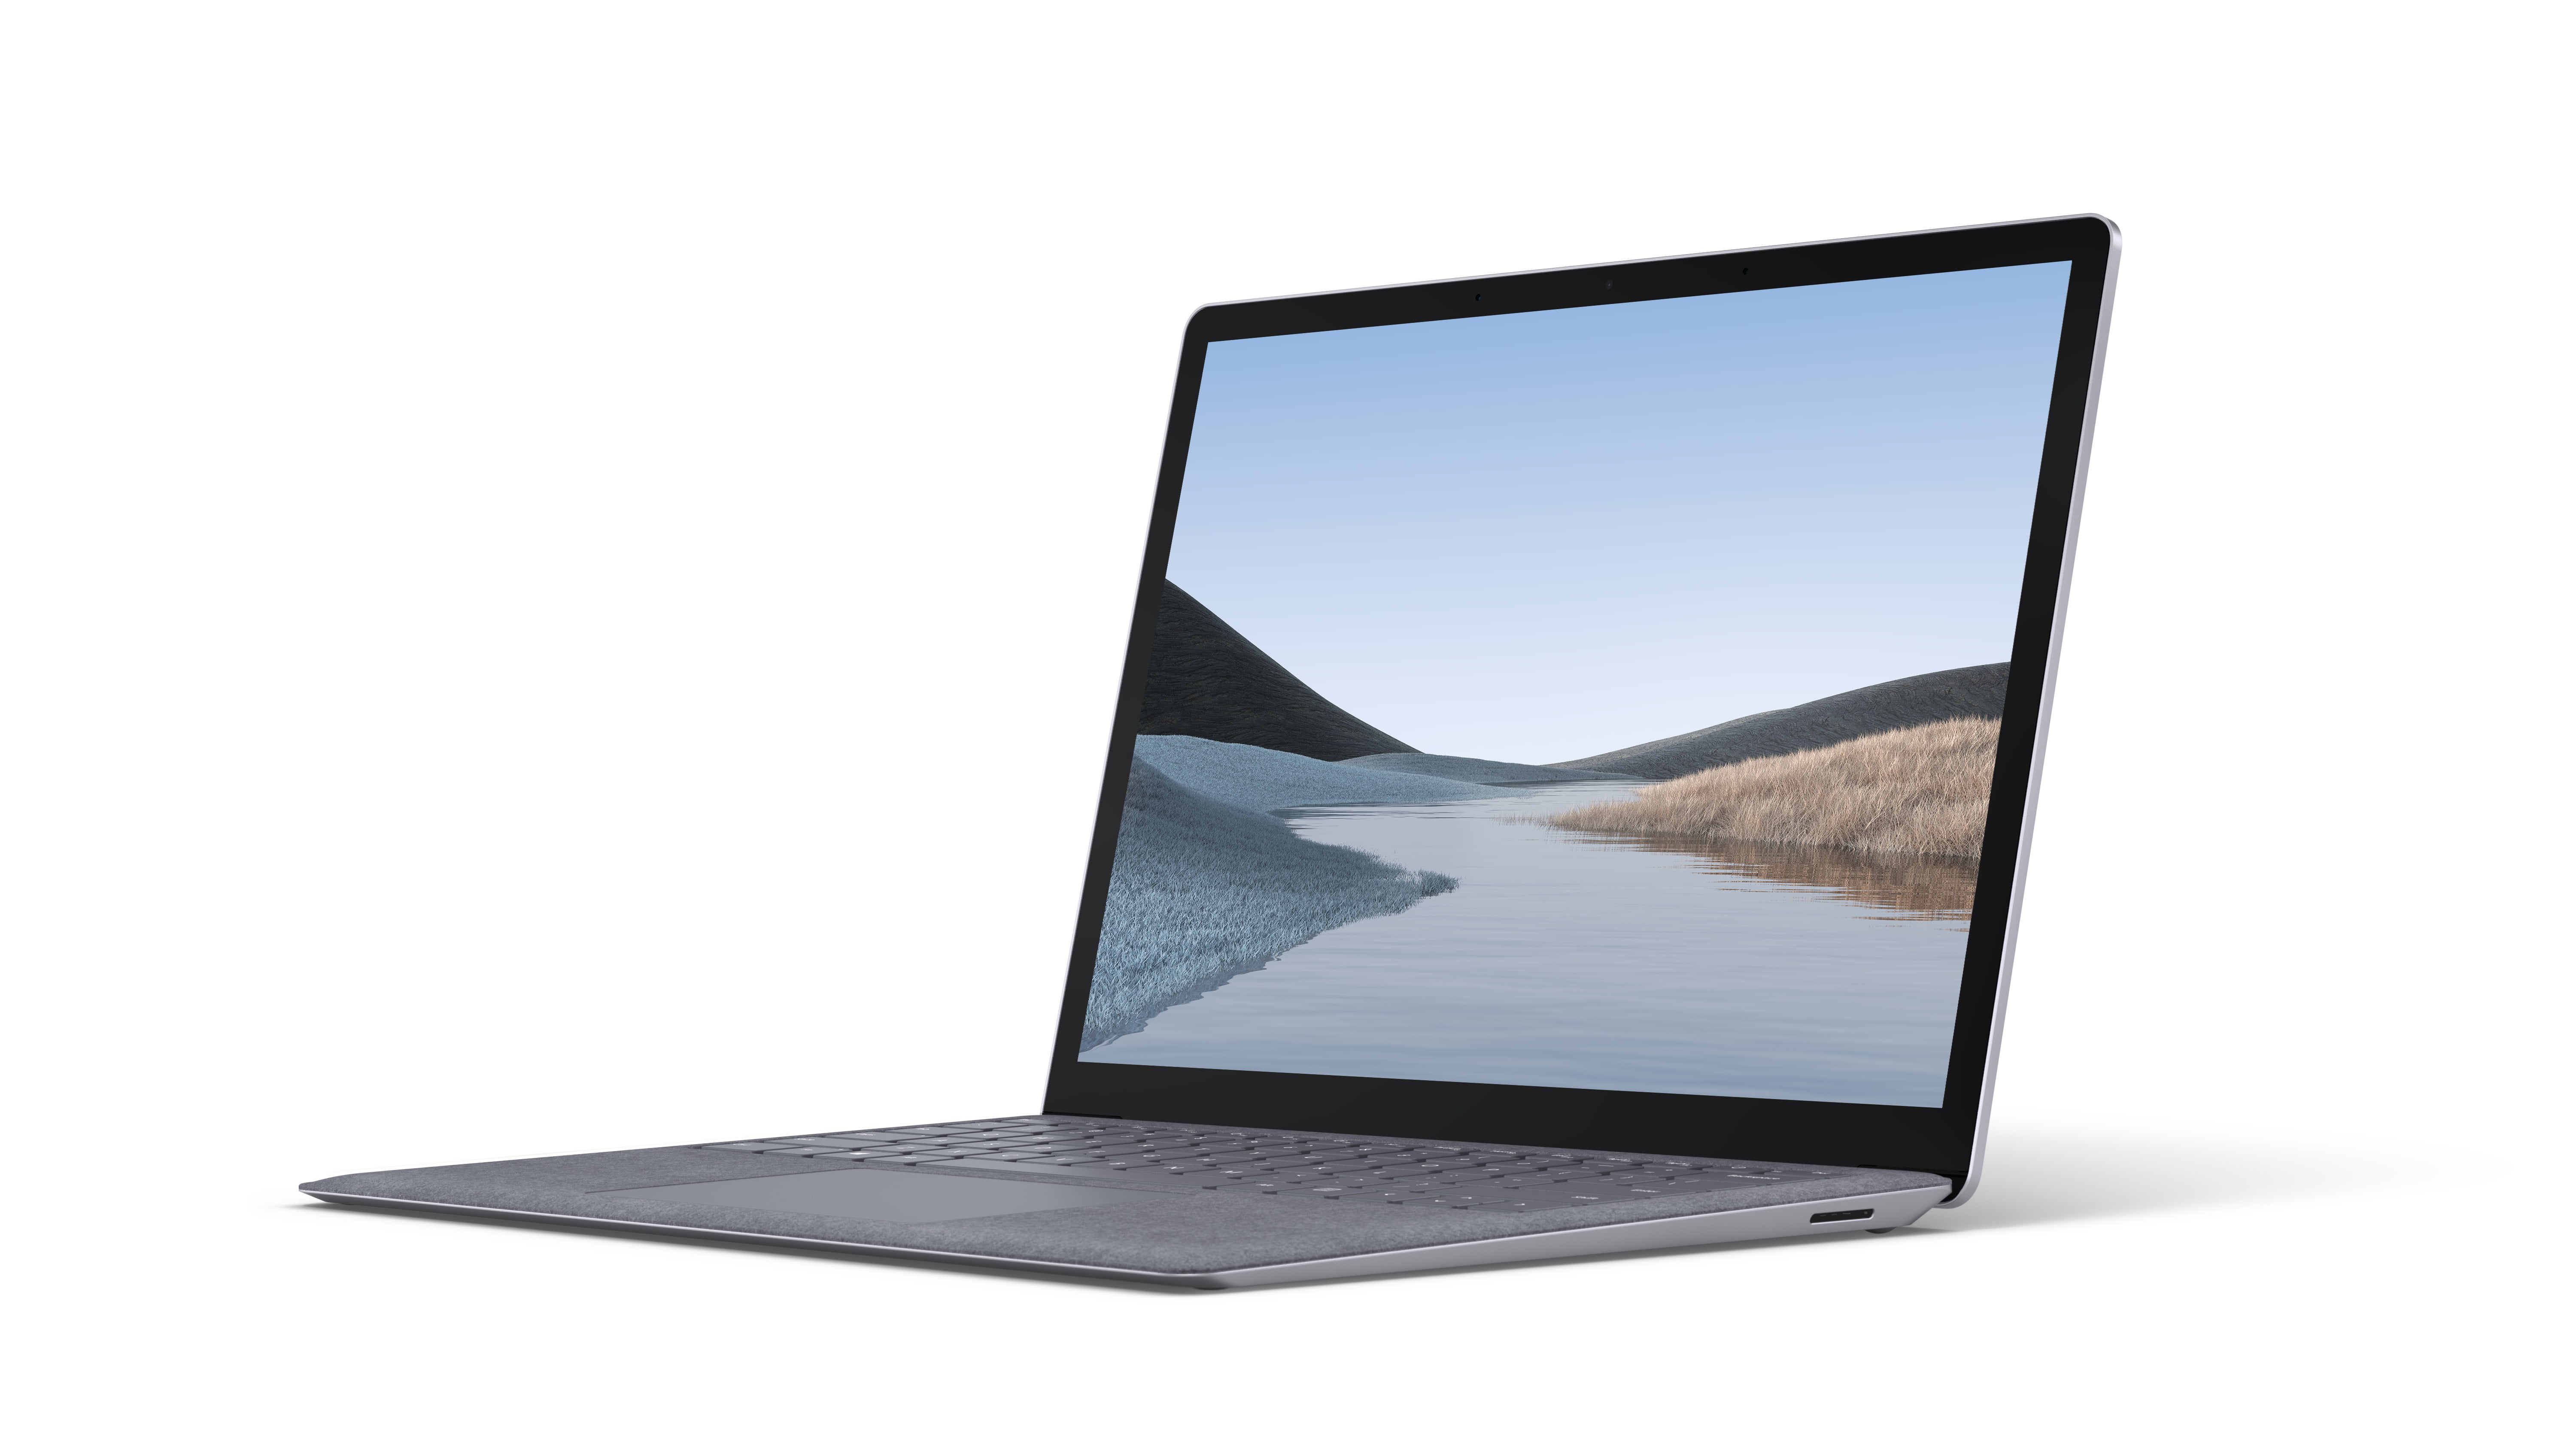 Microsoft Surface Laptop 3, 13.5" Touch-Screen, Intel Core i5-1035G7, 8GB Memory, 128GB SSD